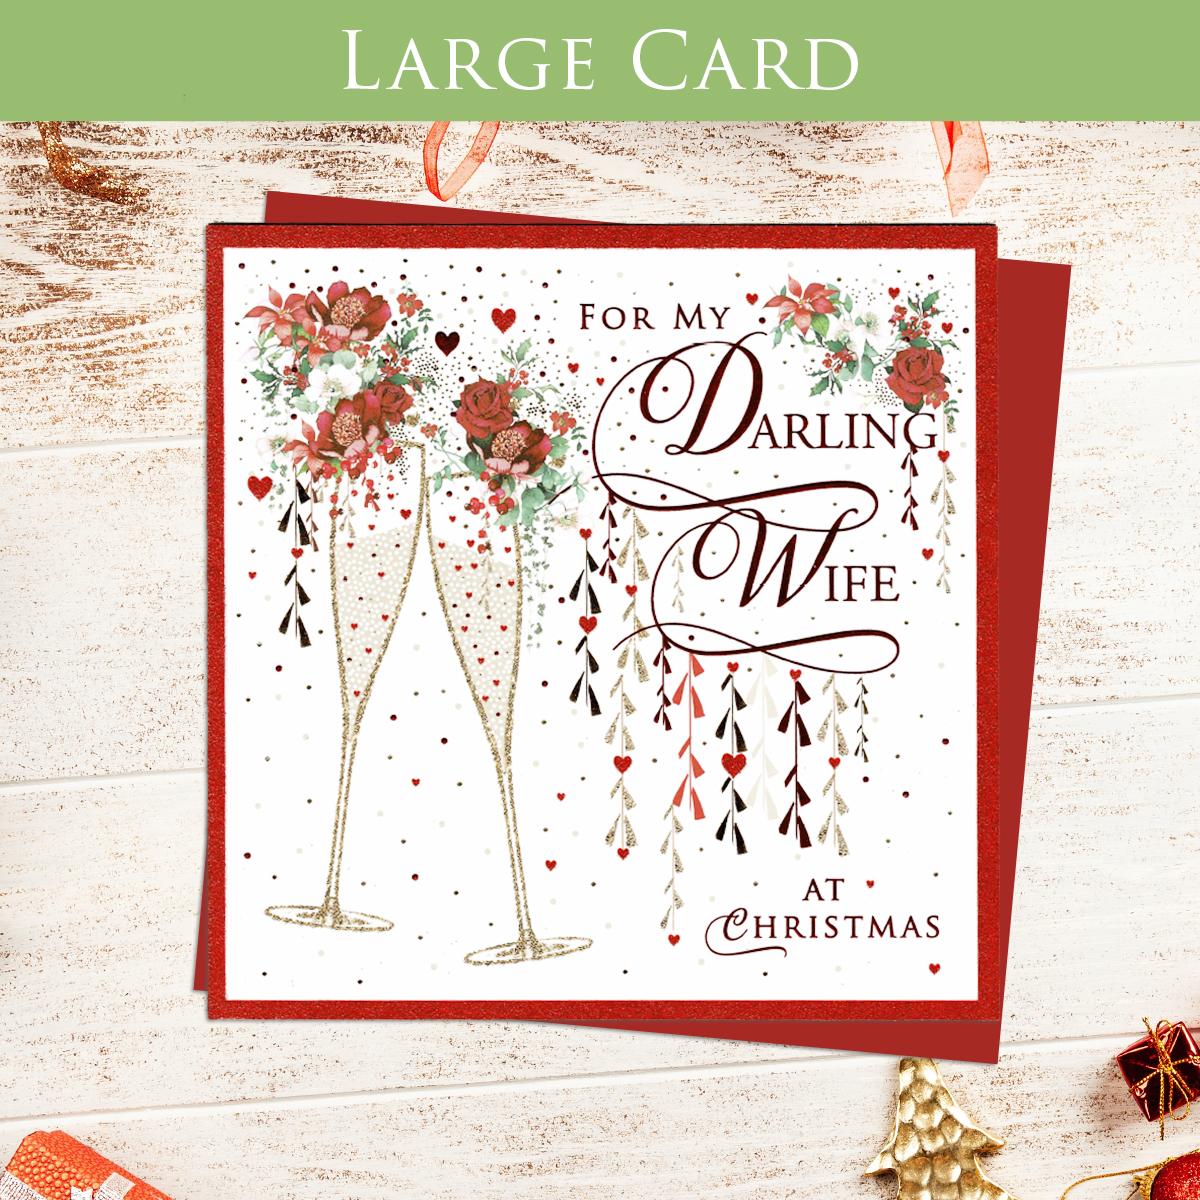 Darkling Wife Large Christmas Card Alongside Its Red Envelope